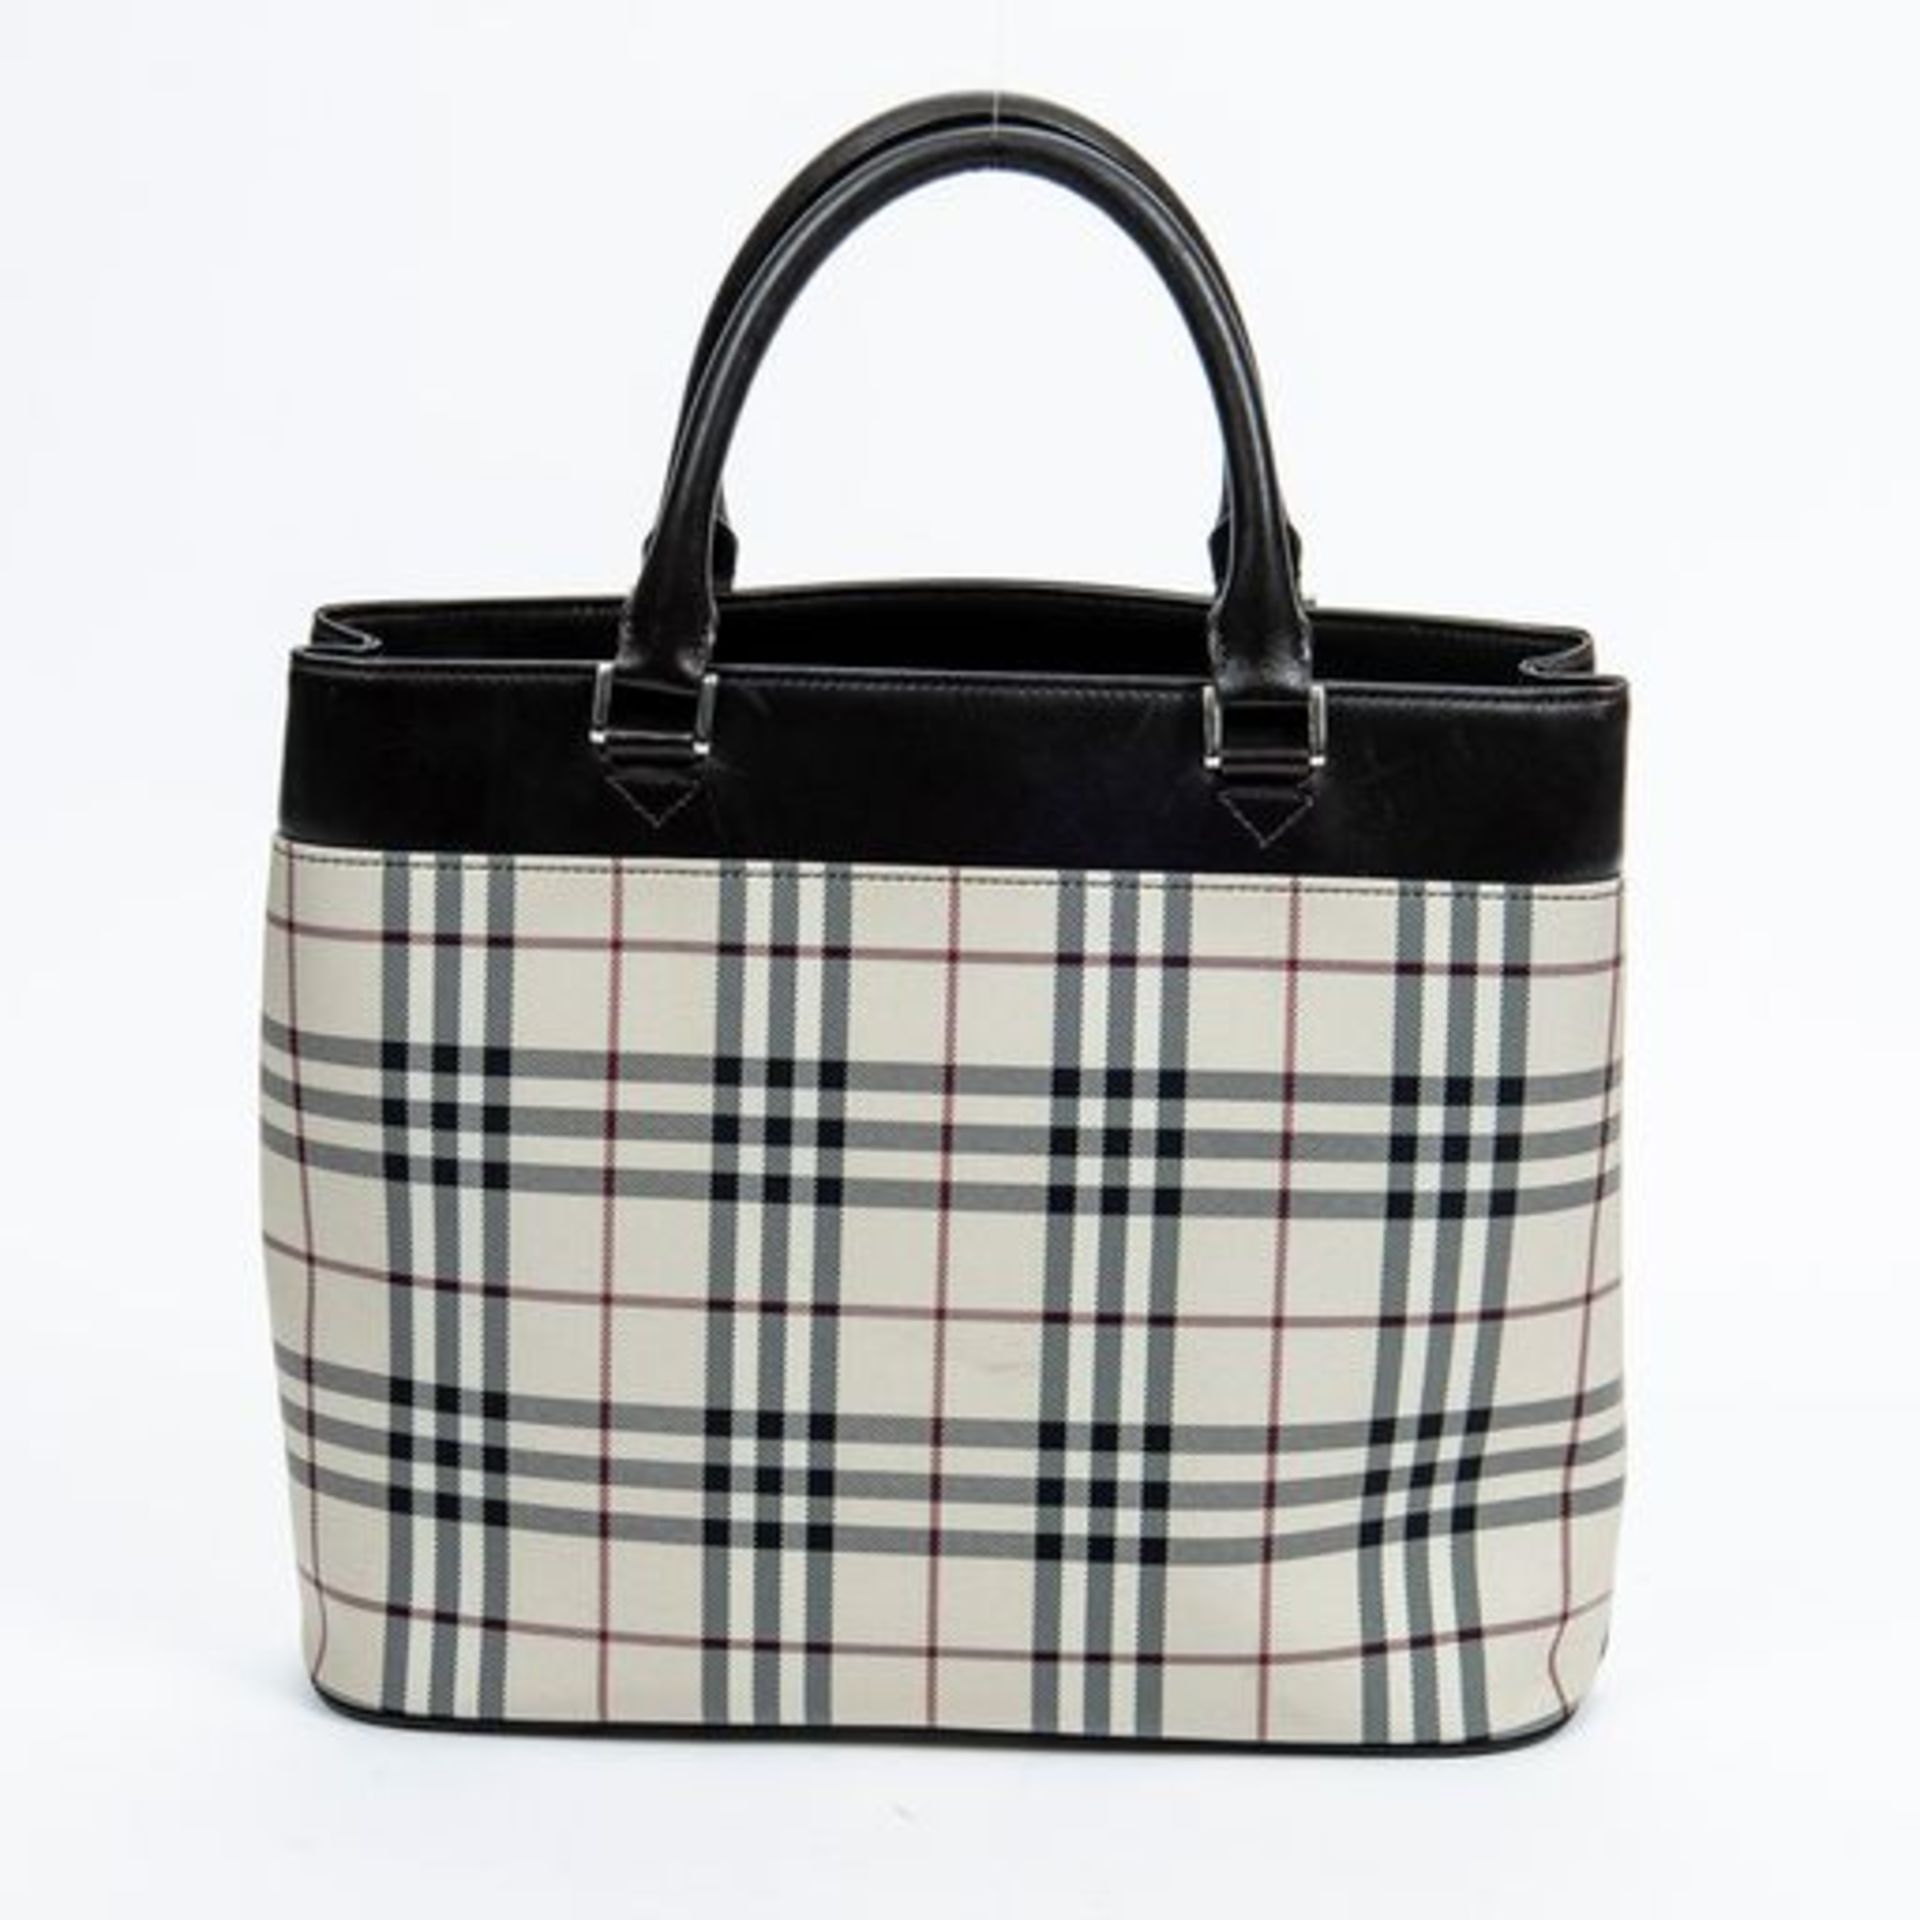 RRP £975.00 Lot To Contain 1 Burberry Canvas Medium Slip Pocket Tote Handbag In Beige/Dark Brown - - Image 2 of 2